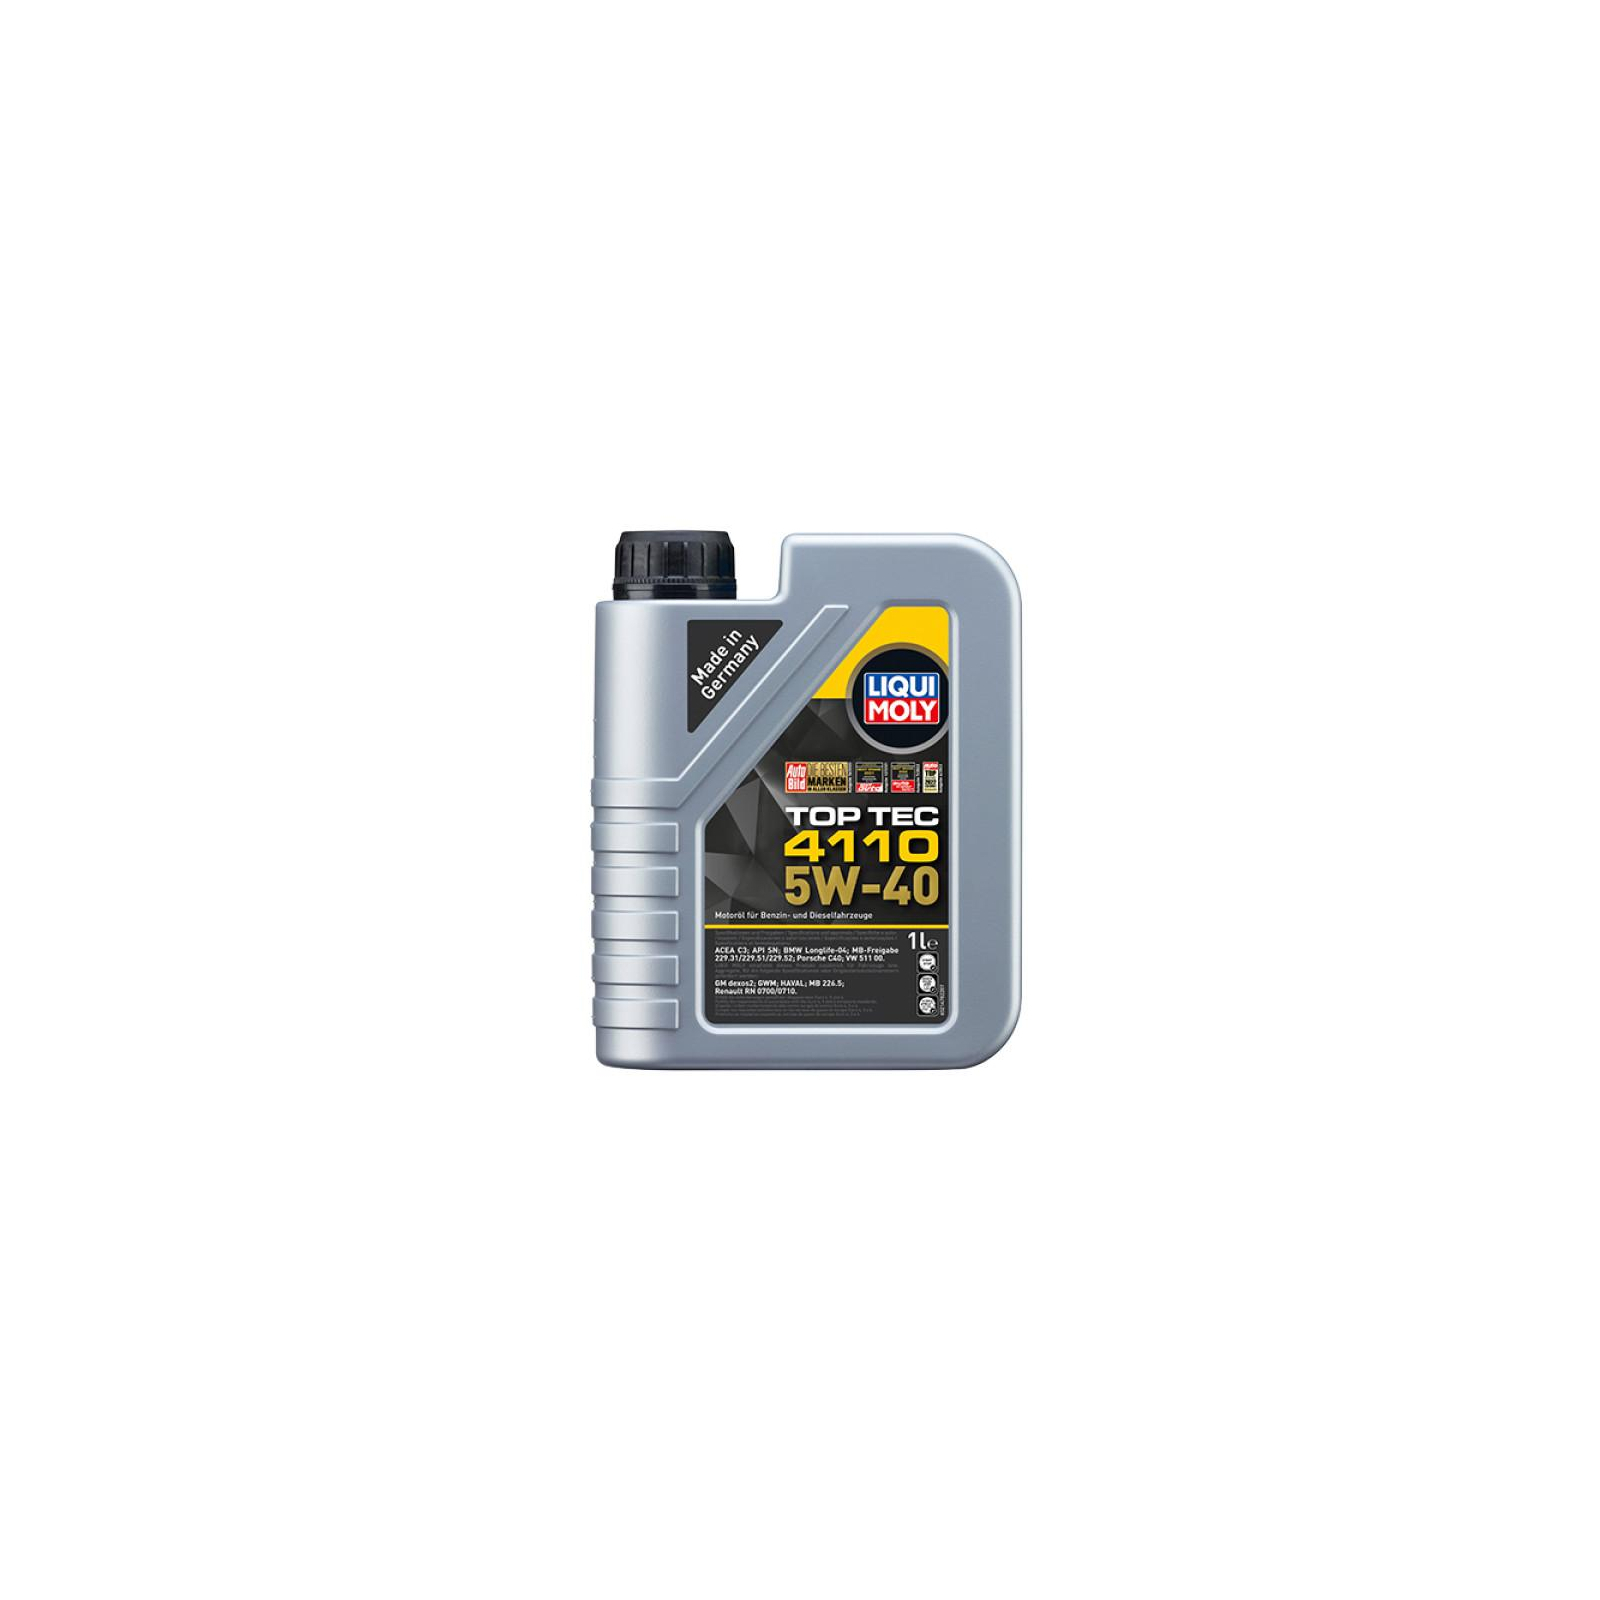 Моторное масло Liqui Moly Top Tec 4110 SAE 5W-40 1л. (21478)